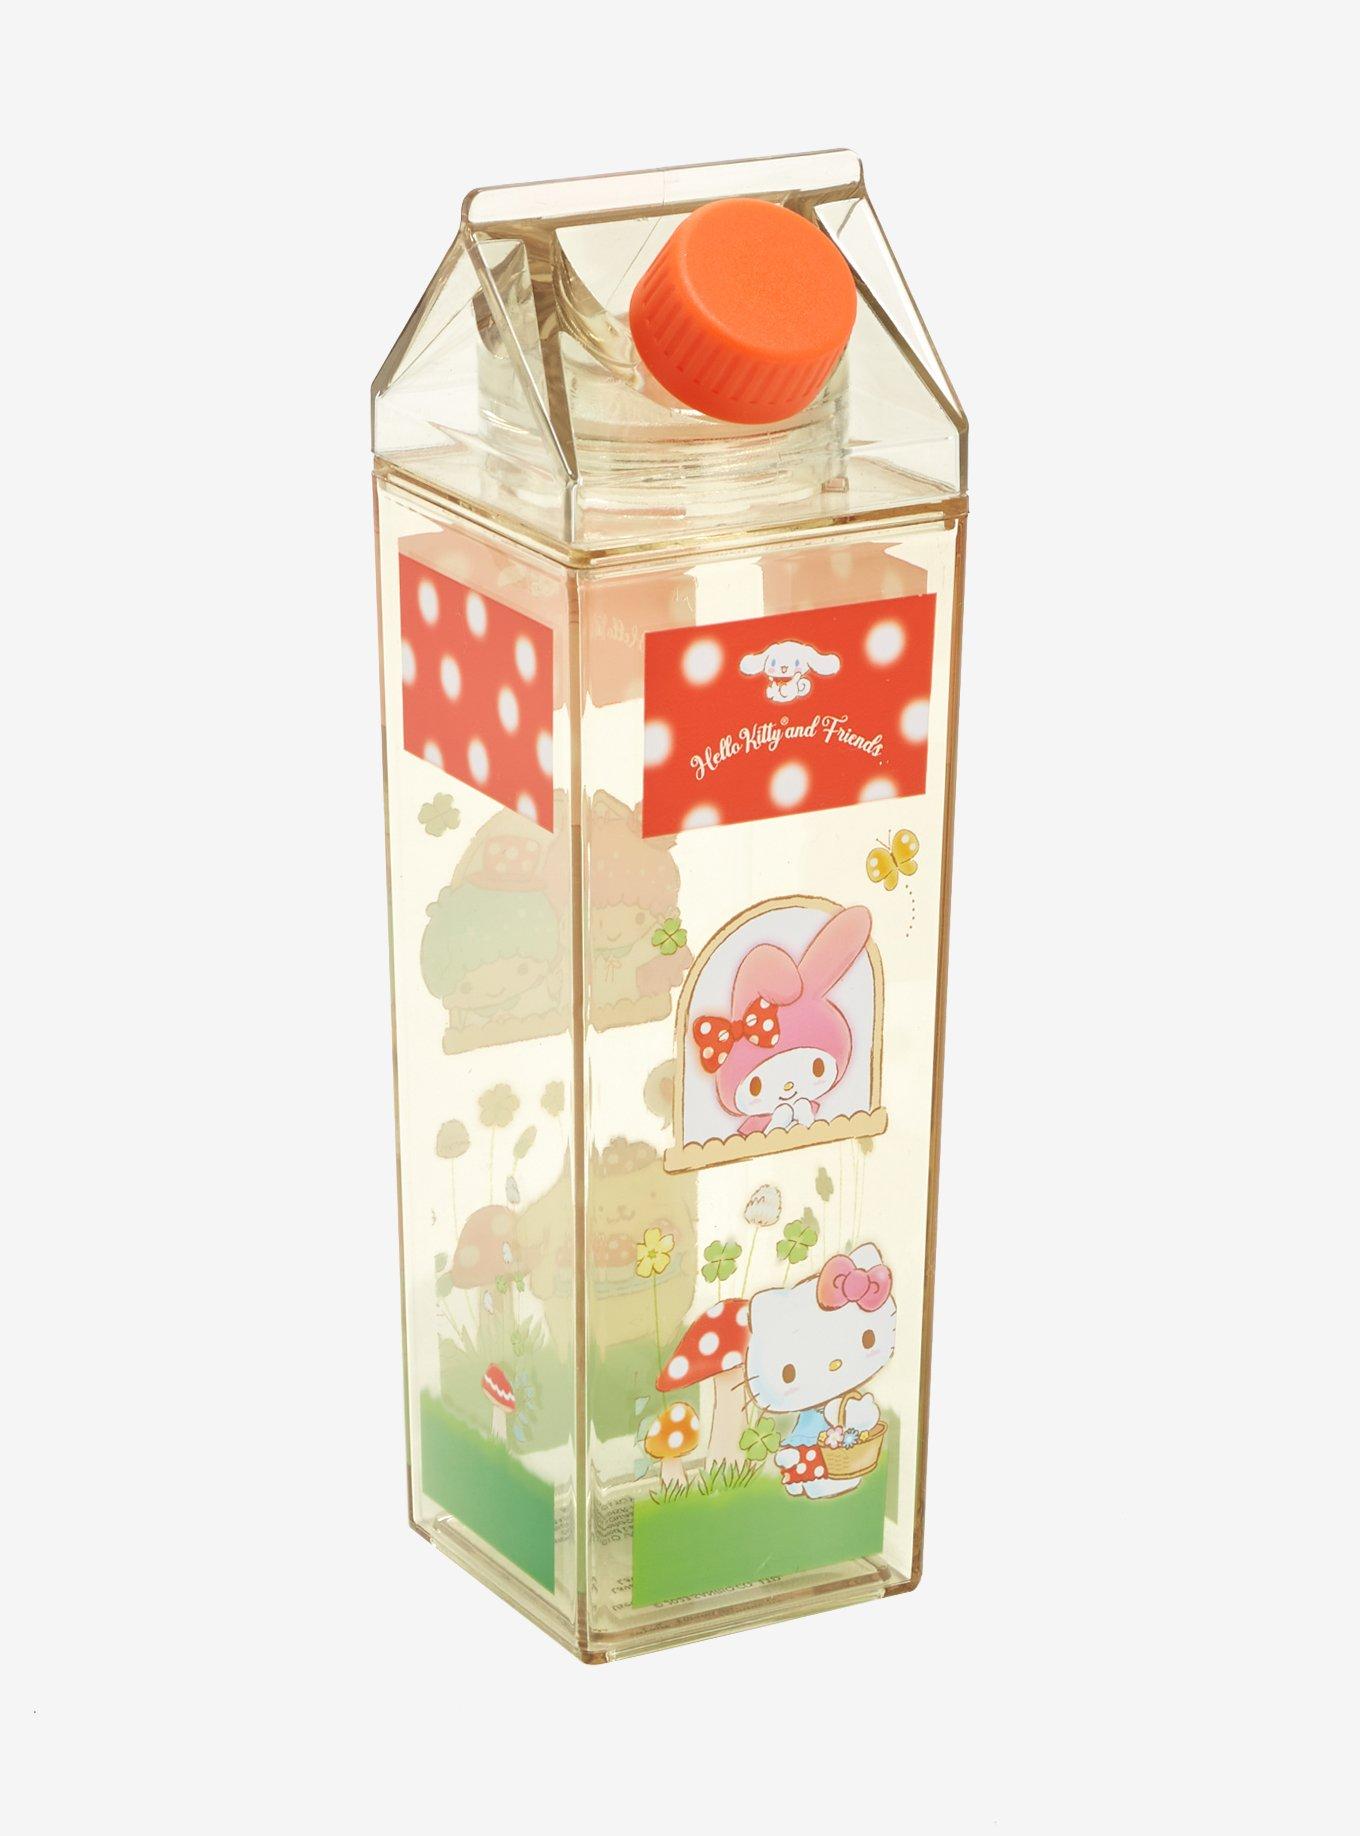 Sanrio, Dining, Kuromi Milk Carton Water Bottle